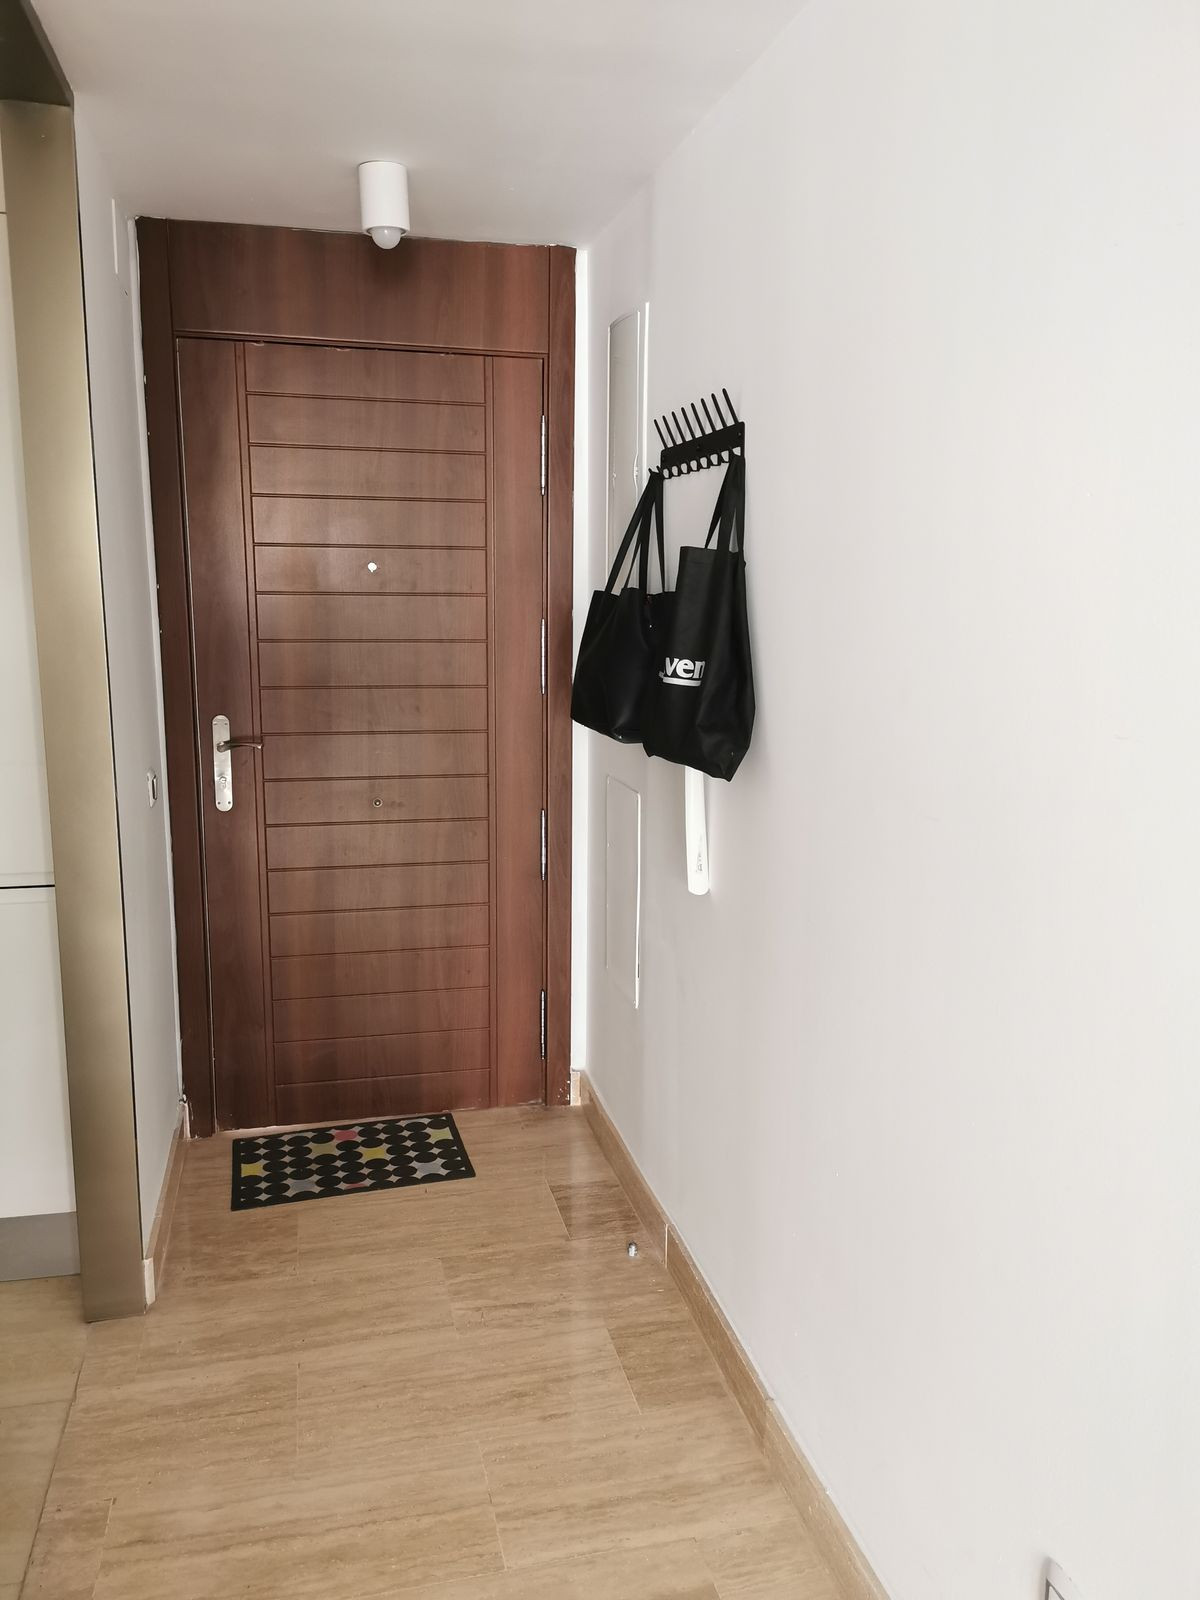 1 bedroom Apartment For Sale in Mijas, Málaga - thumb 11